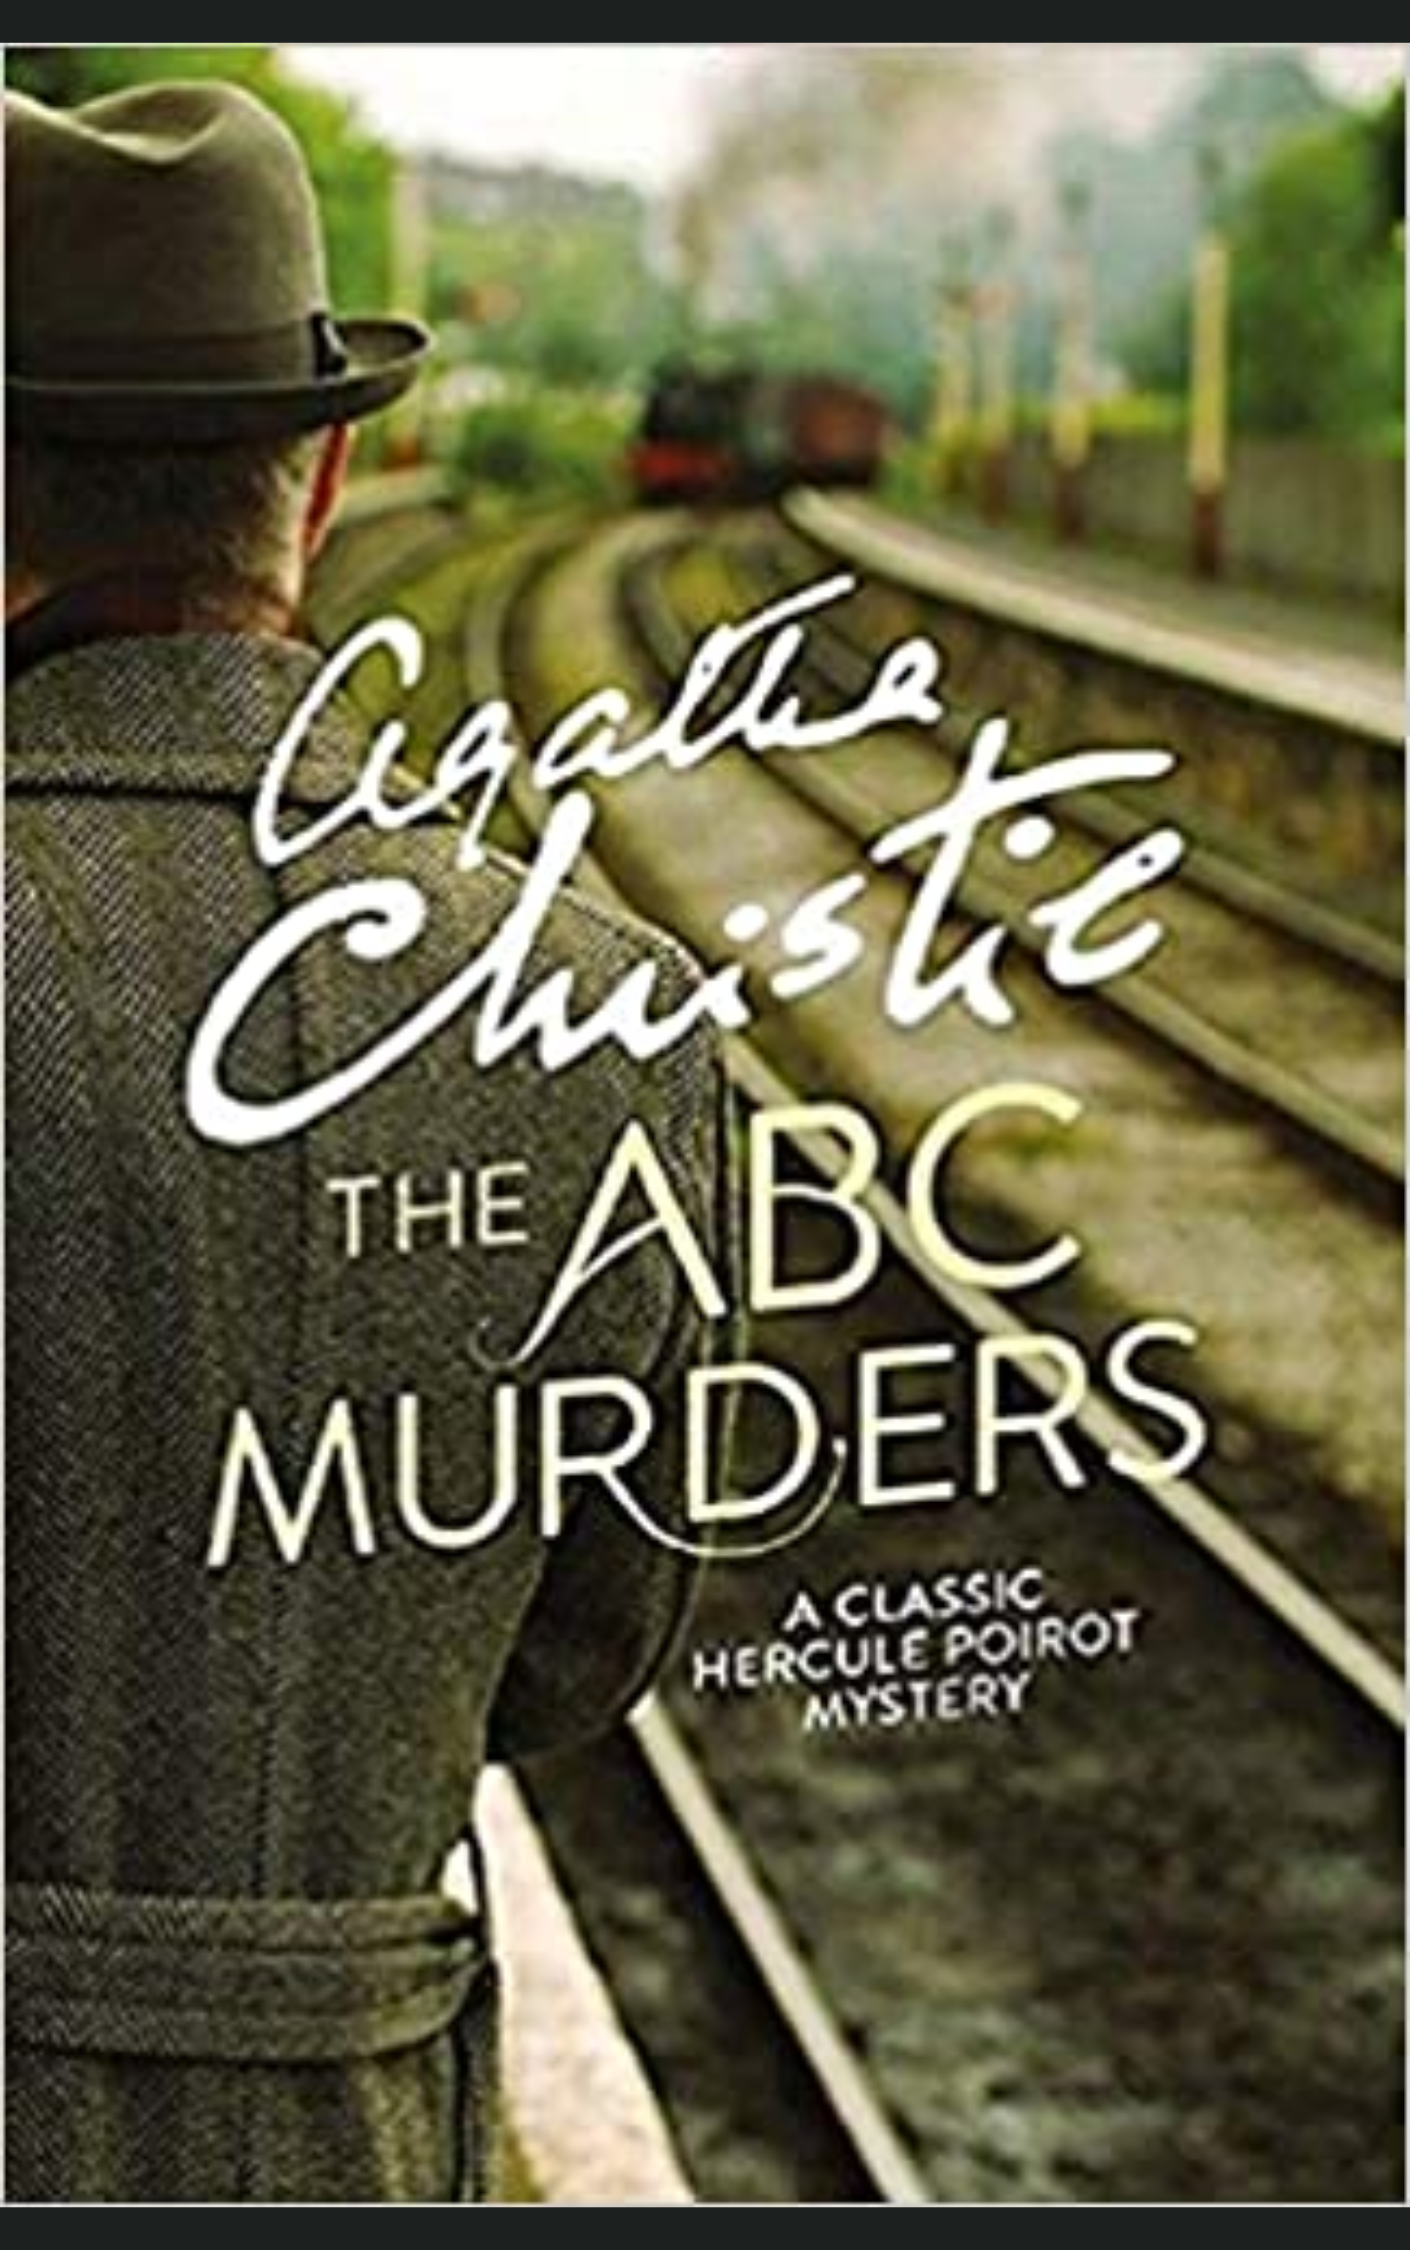 THE ABC MURDERS by AGATHA CHRISTIE